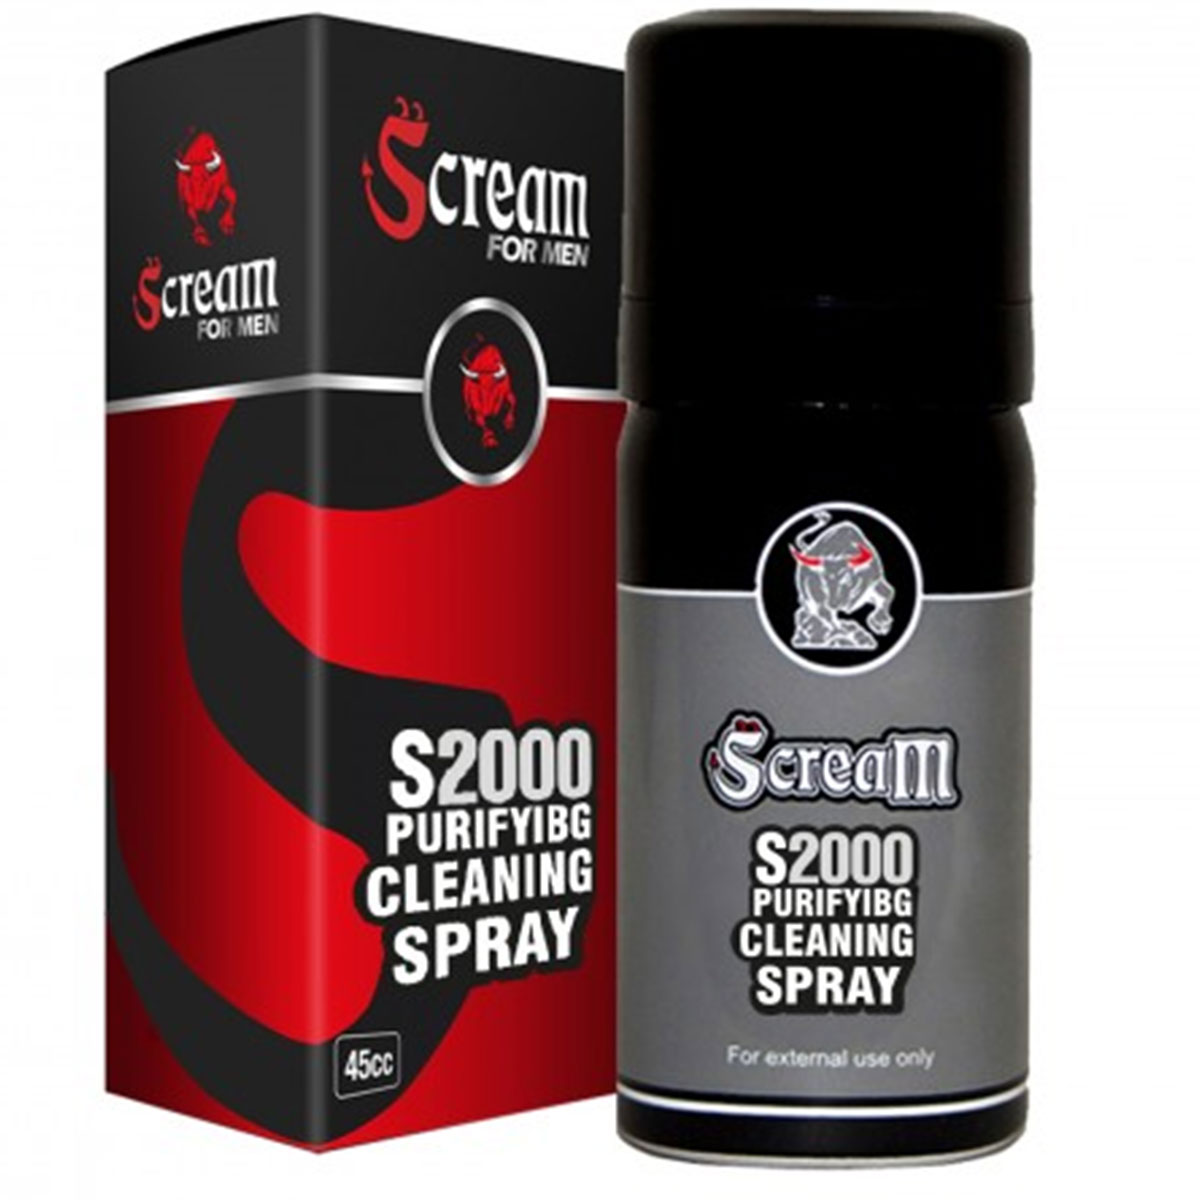 Scream S2000 Spray For Man 45 cc C-1508